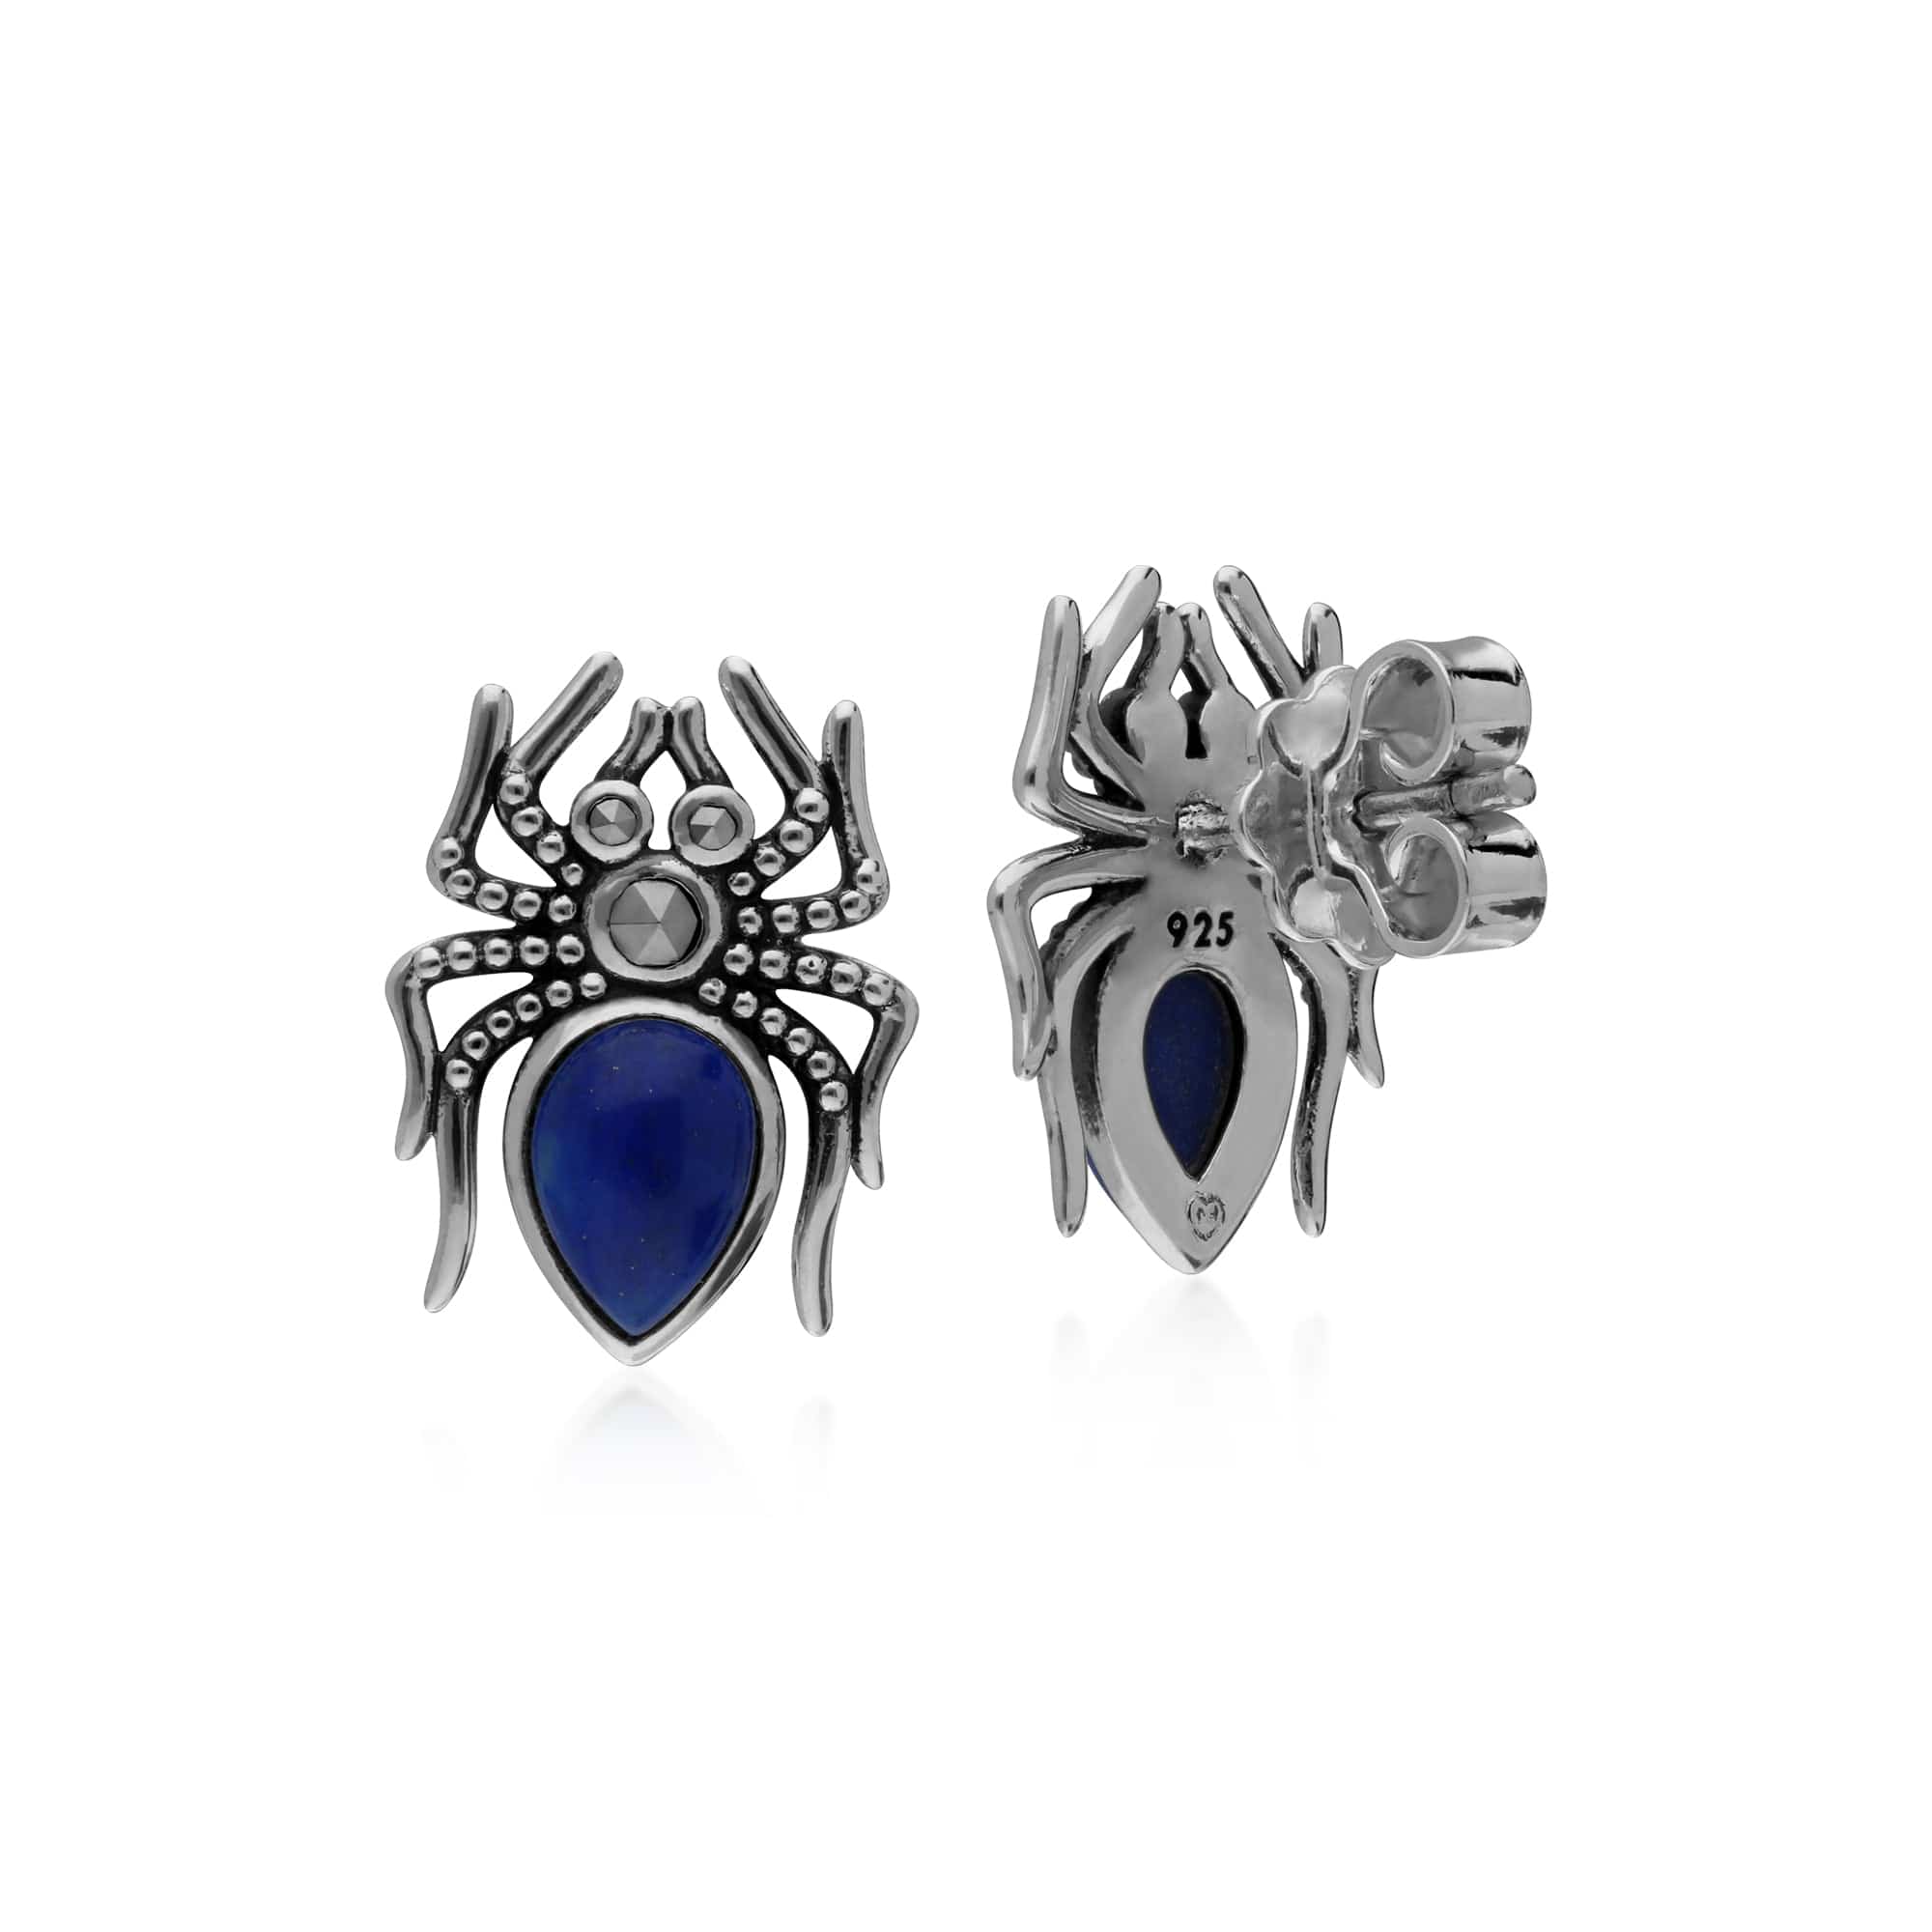 Gemondo Sterling Silver Lapis Lazuli & Marcasite Spider Stud Earrings - Gemondo